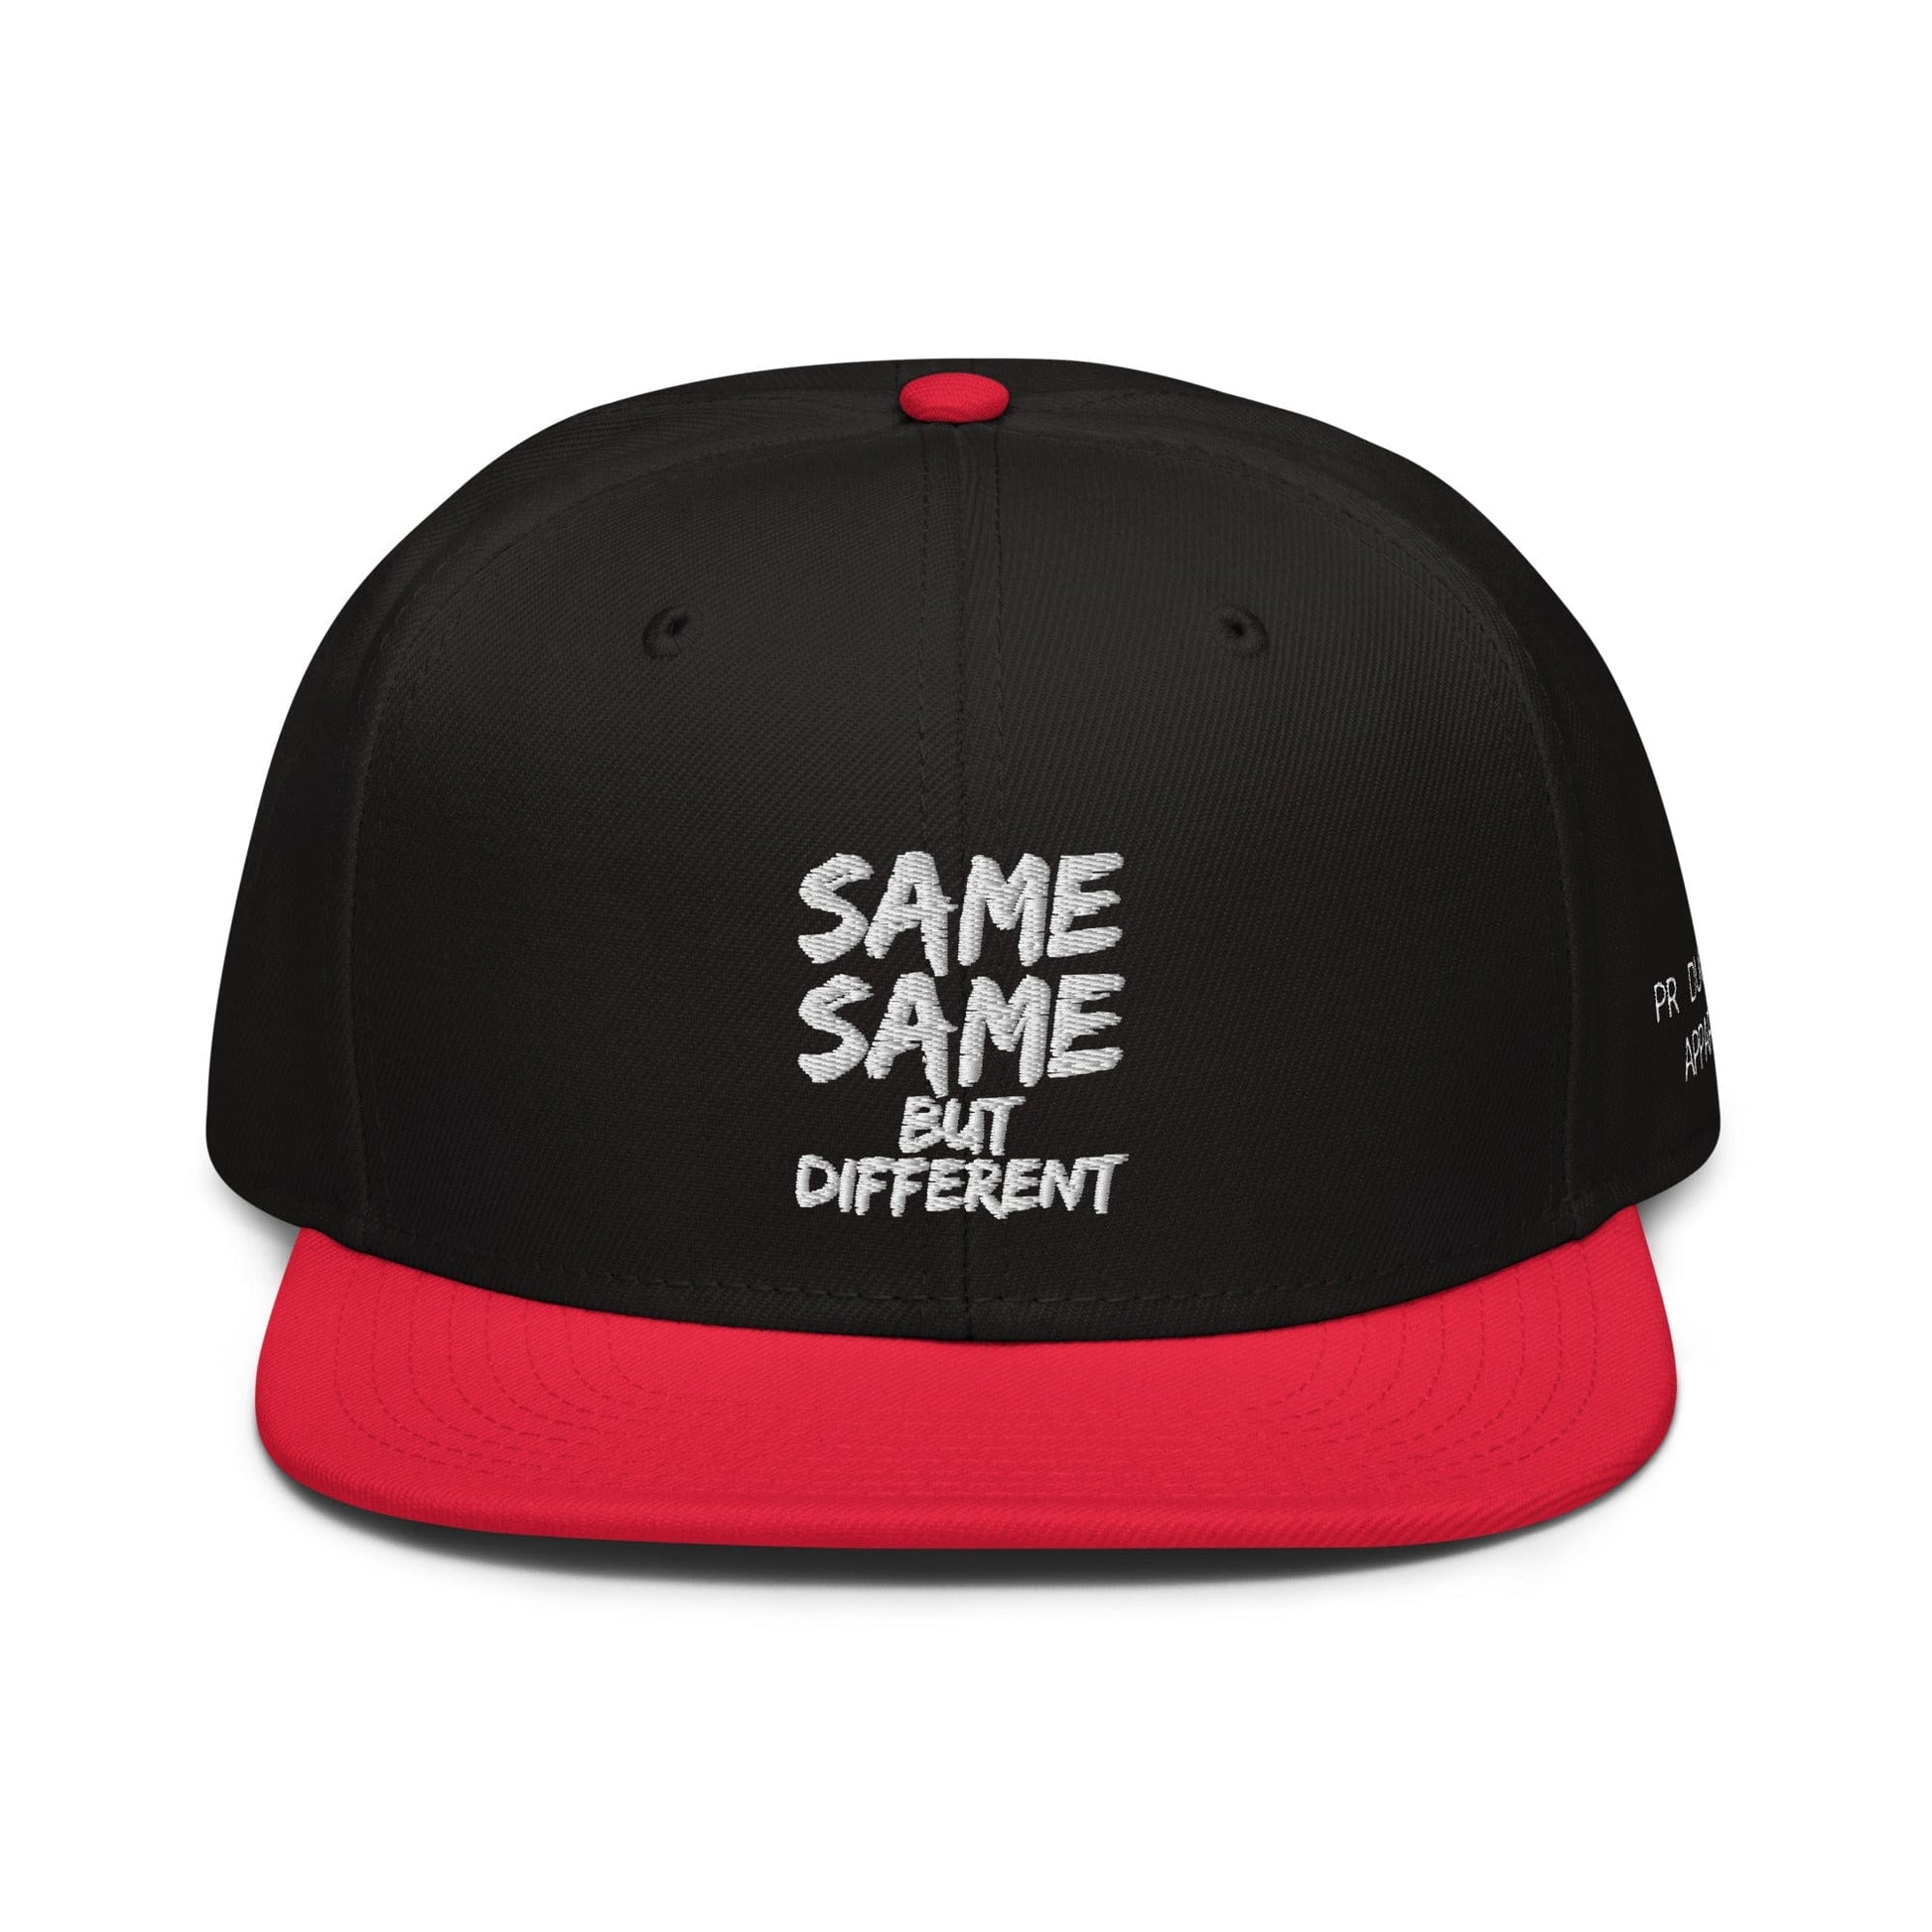 Production Apparel SAME SAME BUT DIFFERENT Hat Red / Black / Black